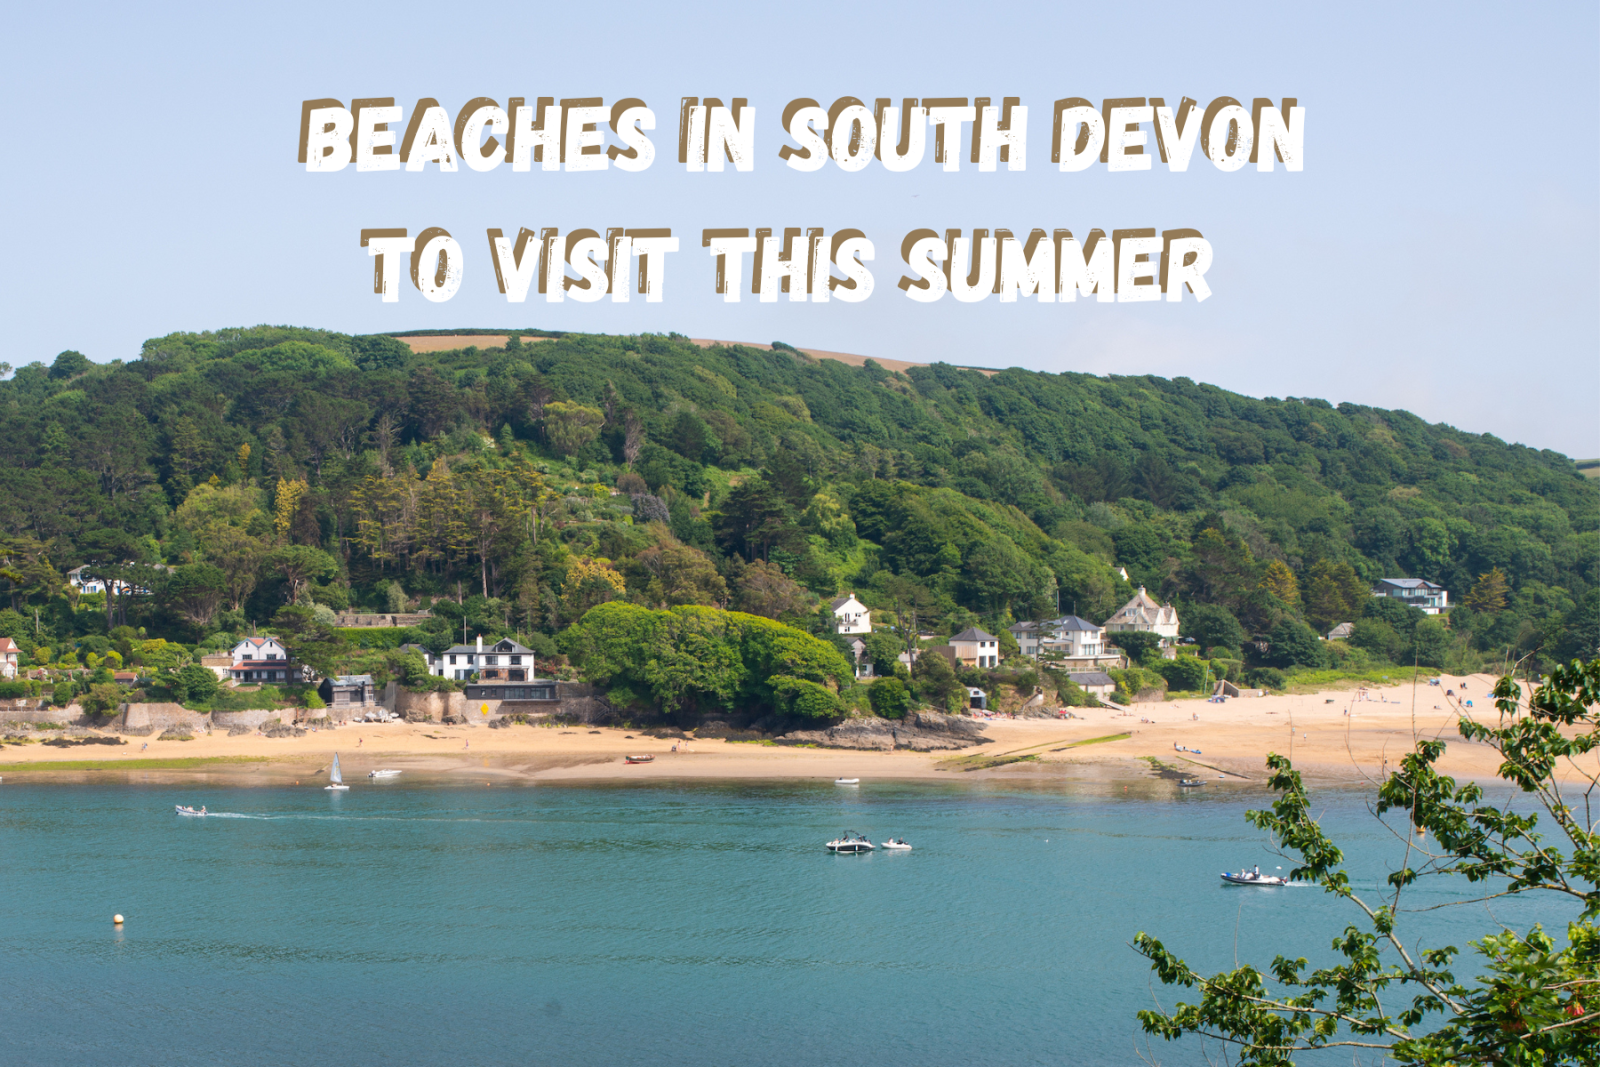 Beaches to visit in South Devon